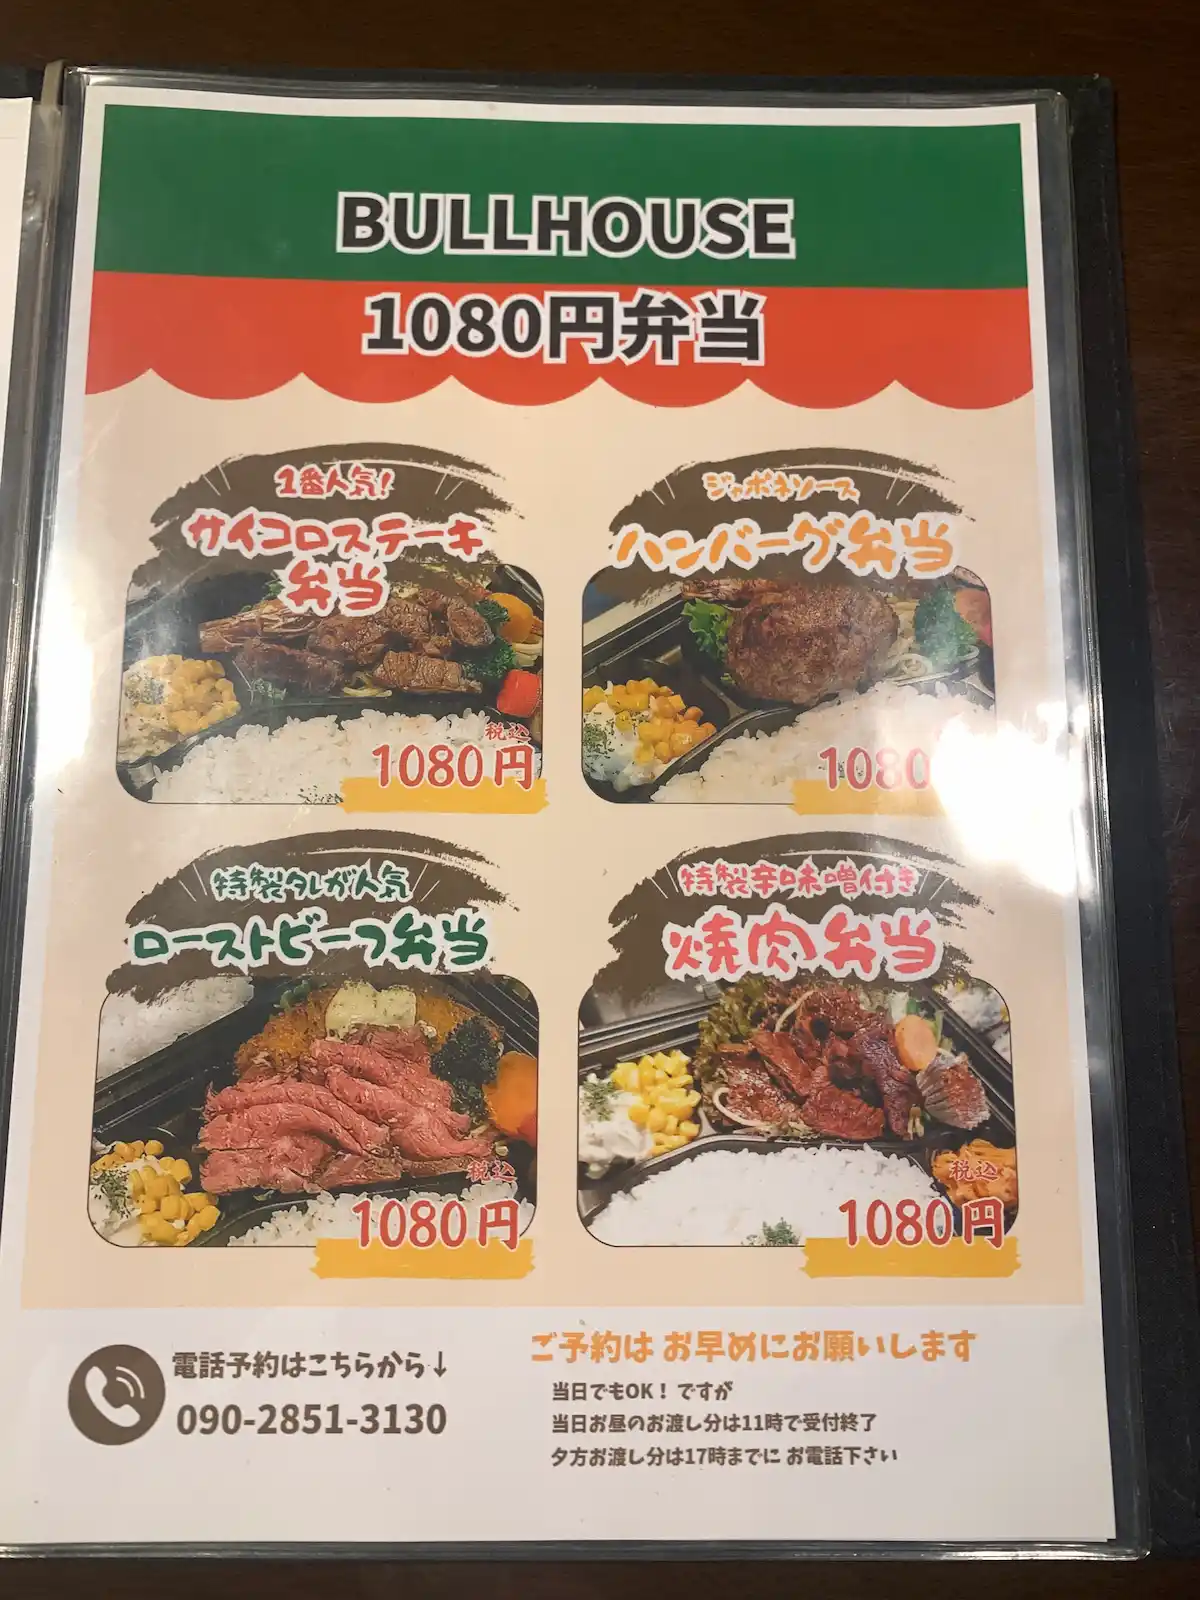 BULL HOUSEの弁当メニュー